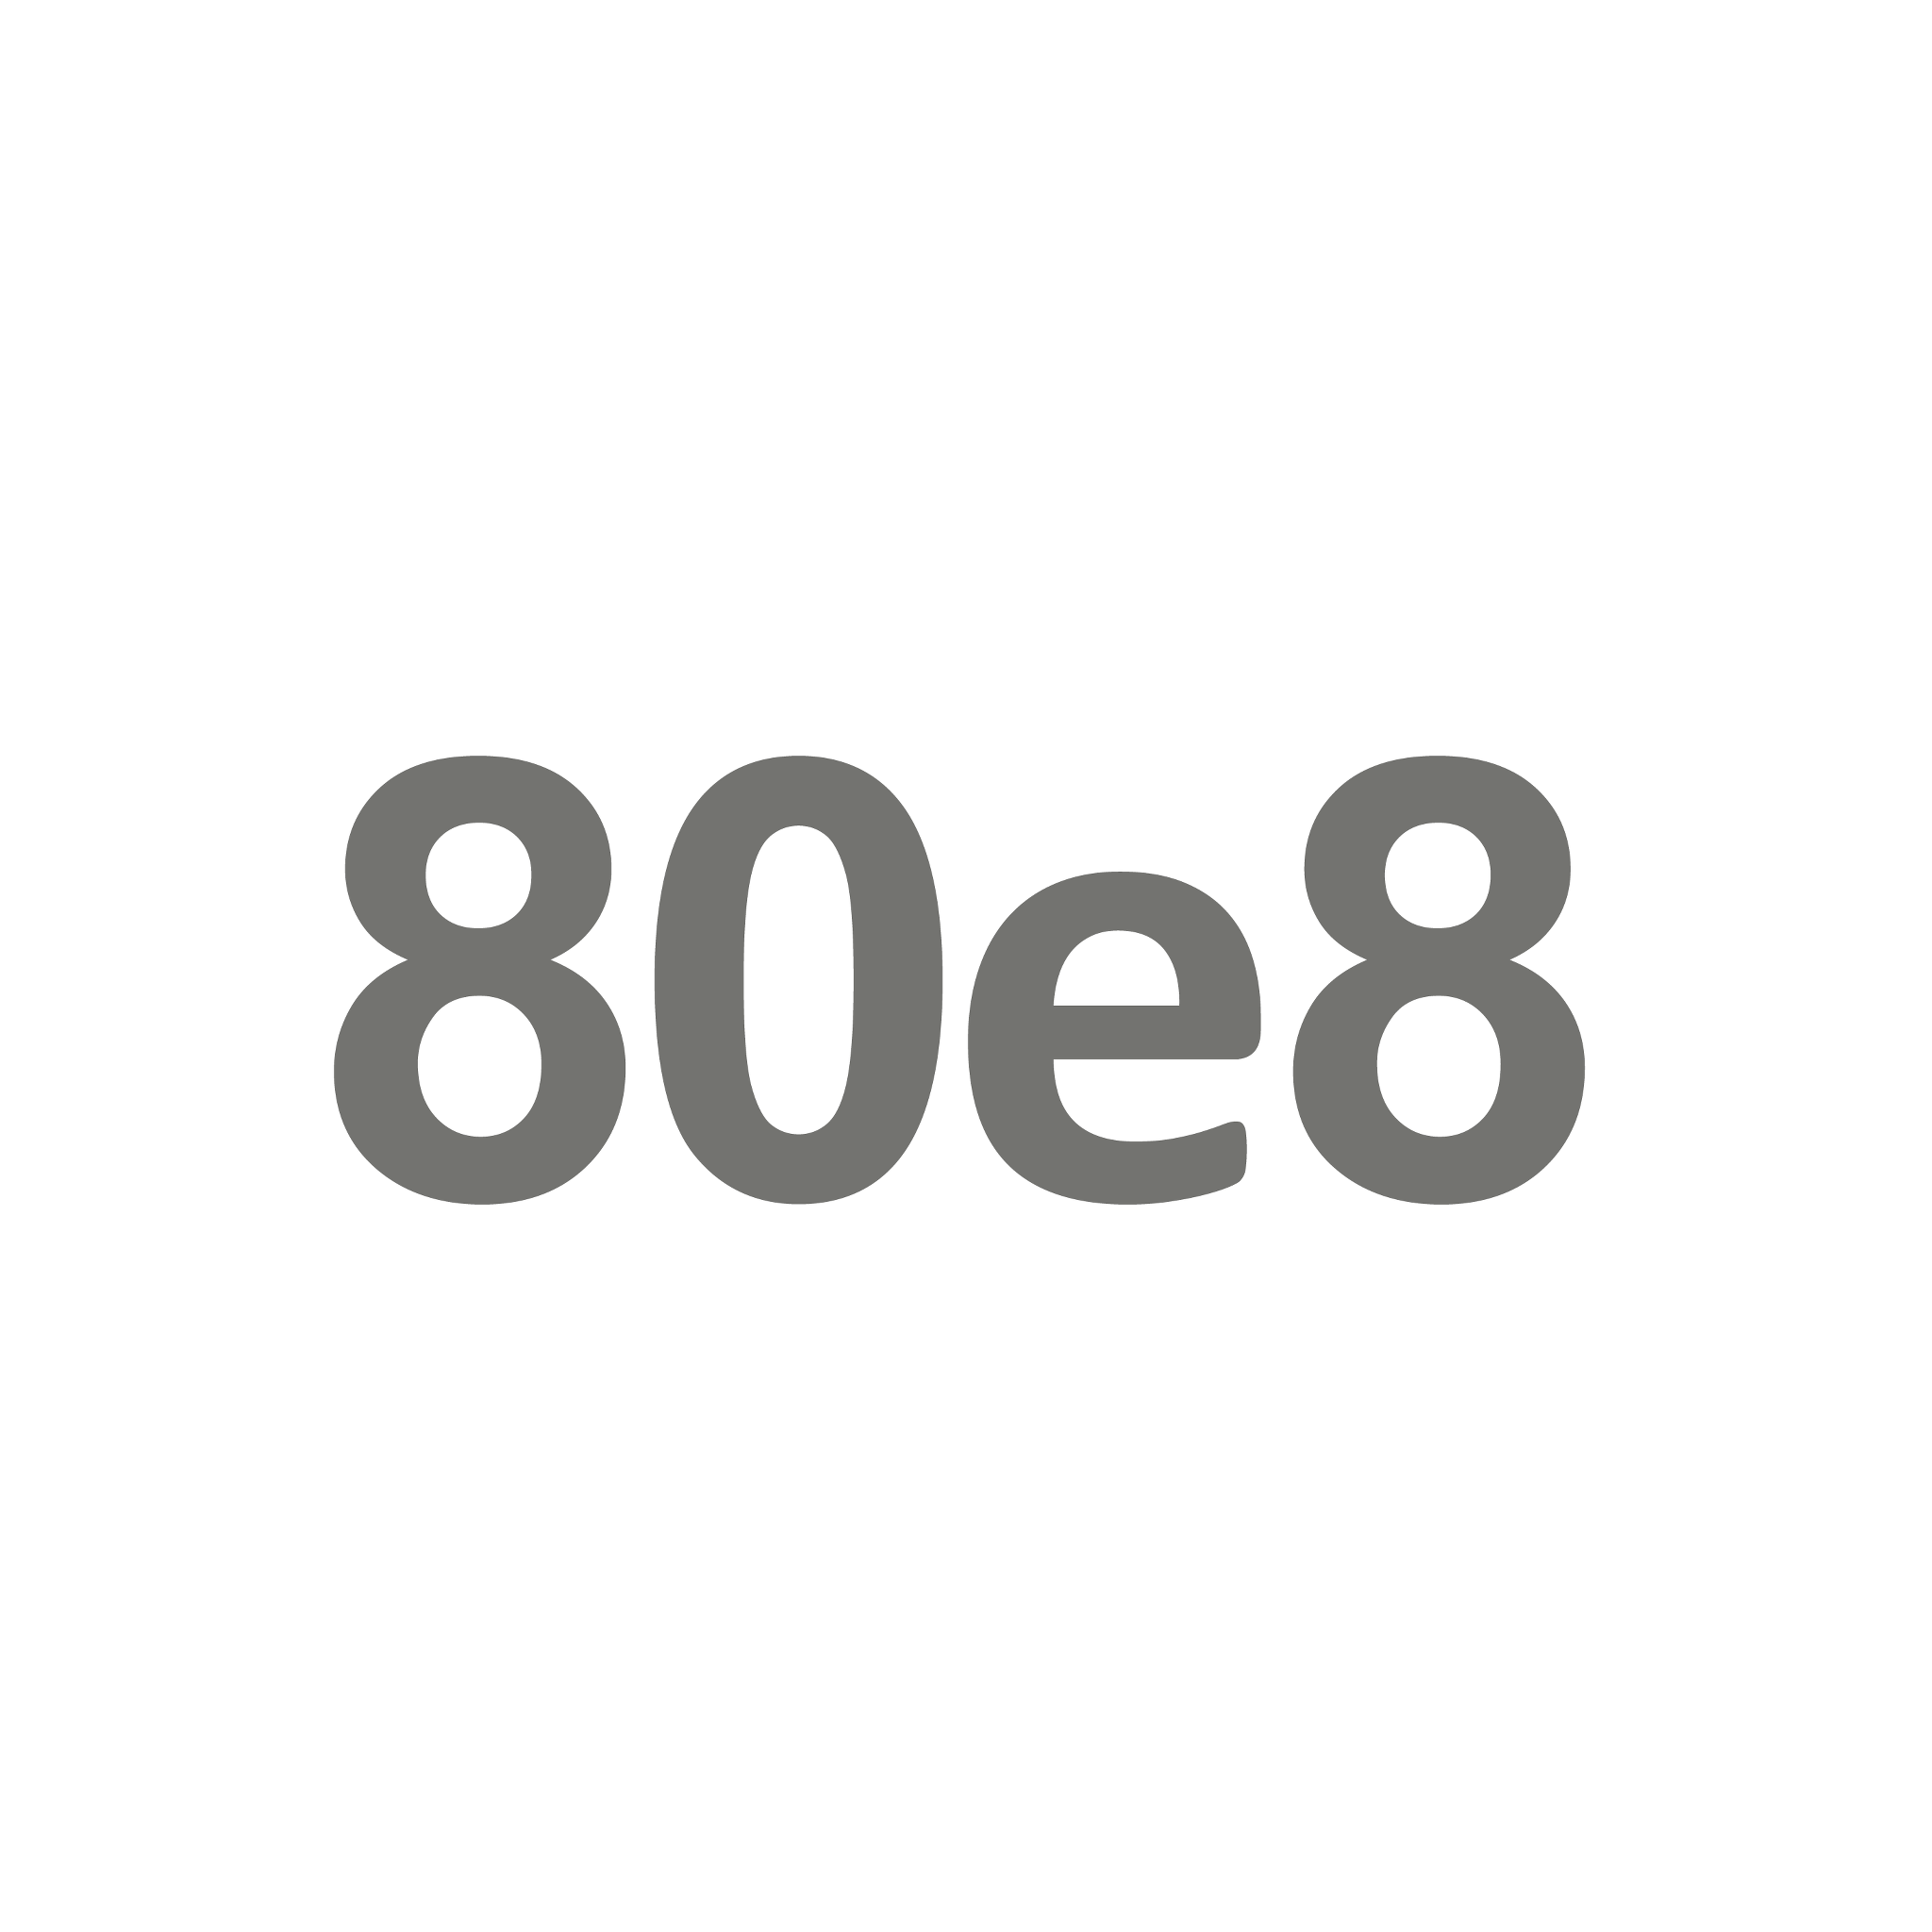 80E8